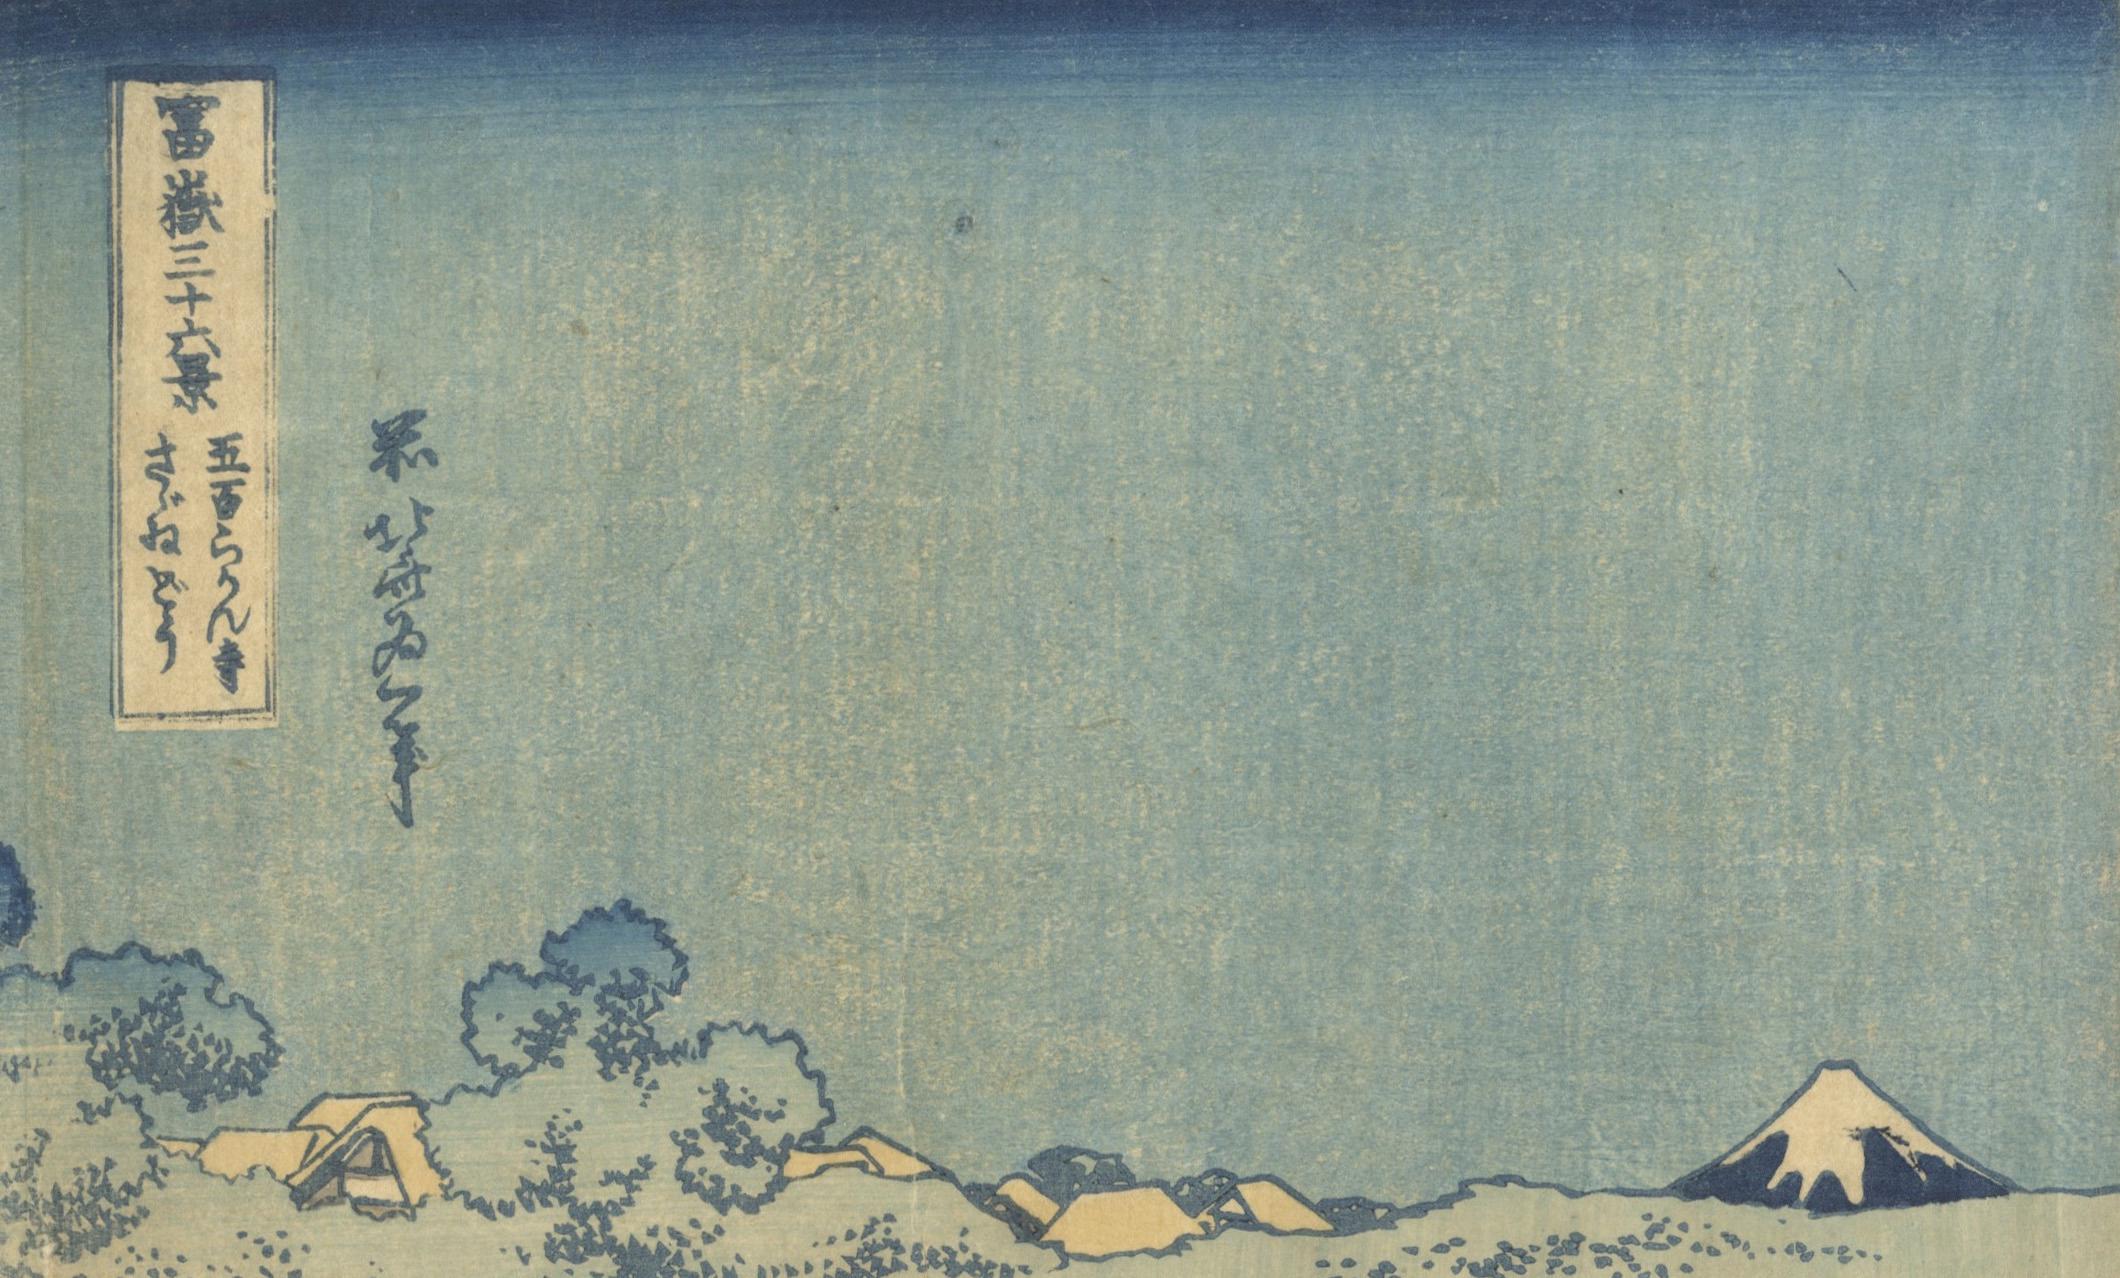 Mulberry Paper Edo Era Japanese Woodblock Print, Hokusai Ukiyo-e 19th Century Woodcut For Sale